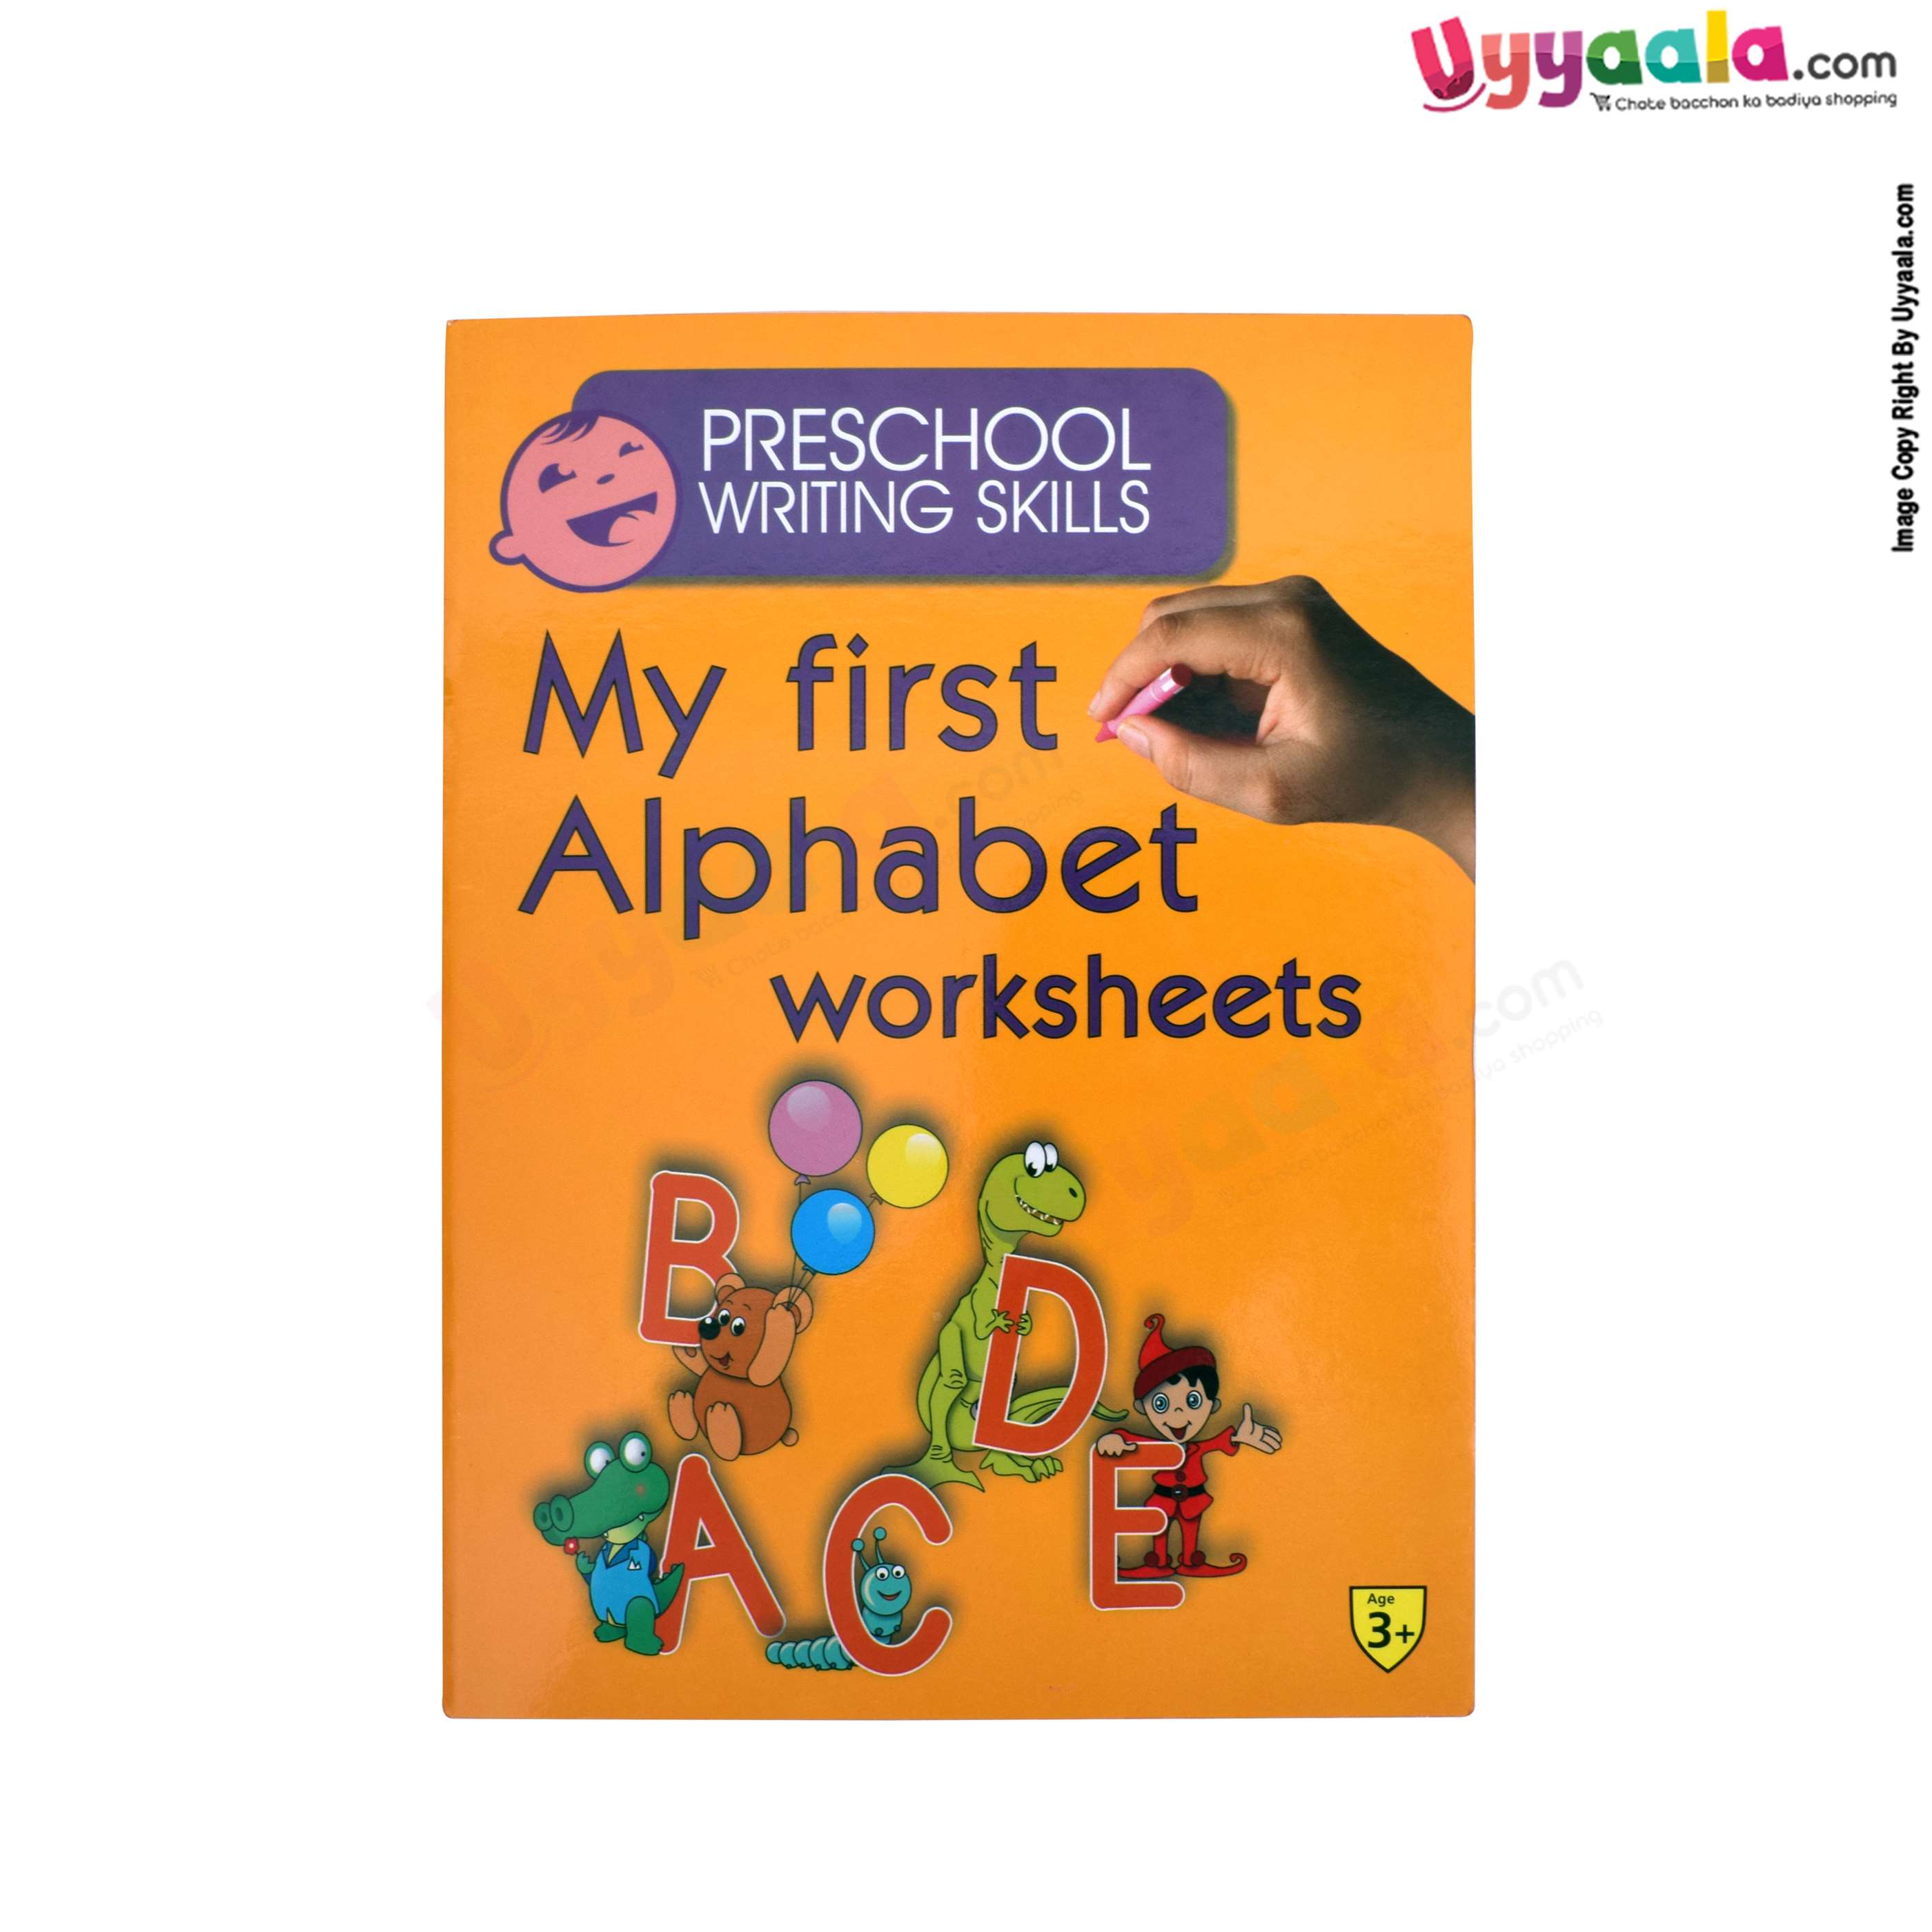 Preschool writing skills - my first alphabet worksheets, 3 + years